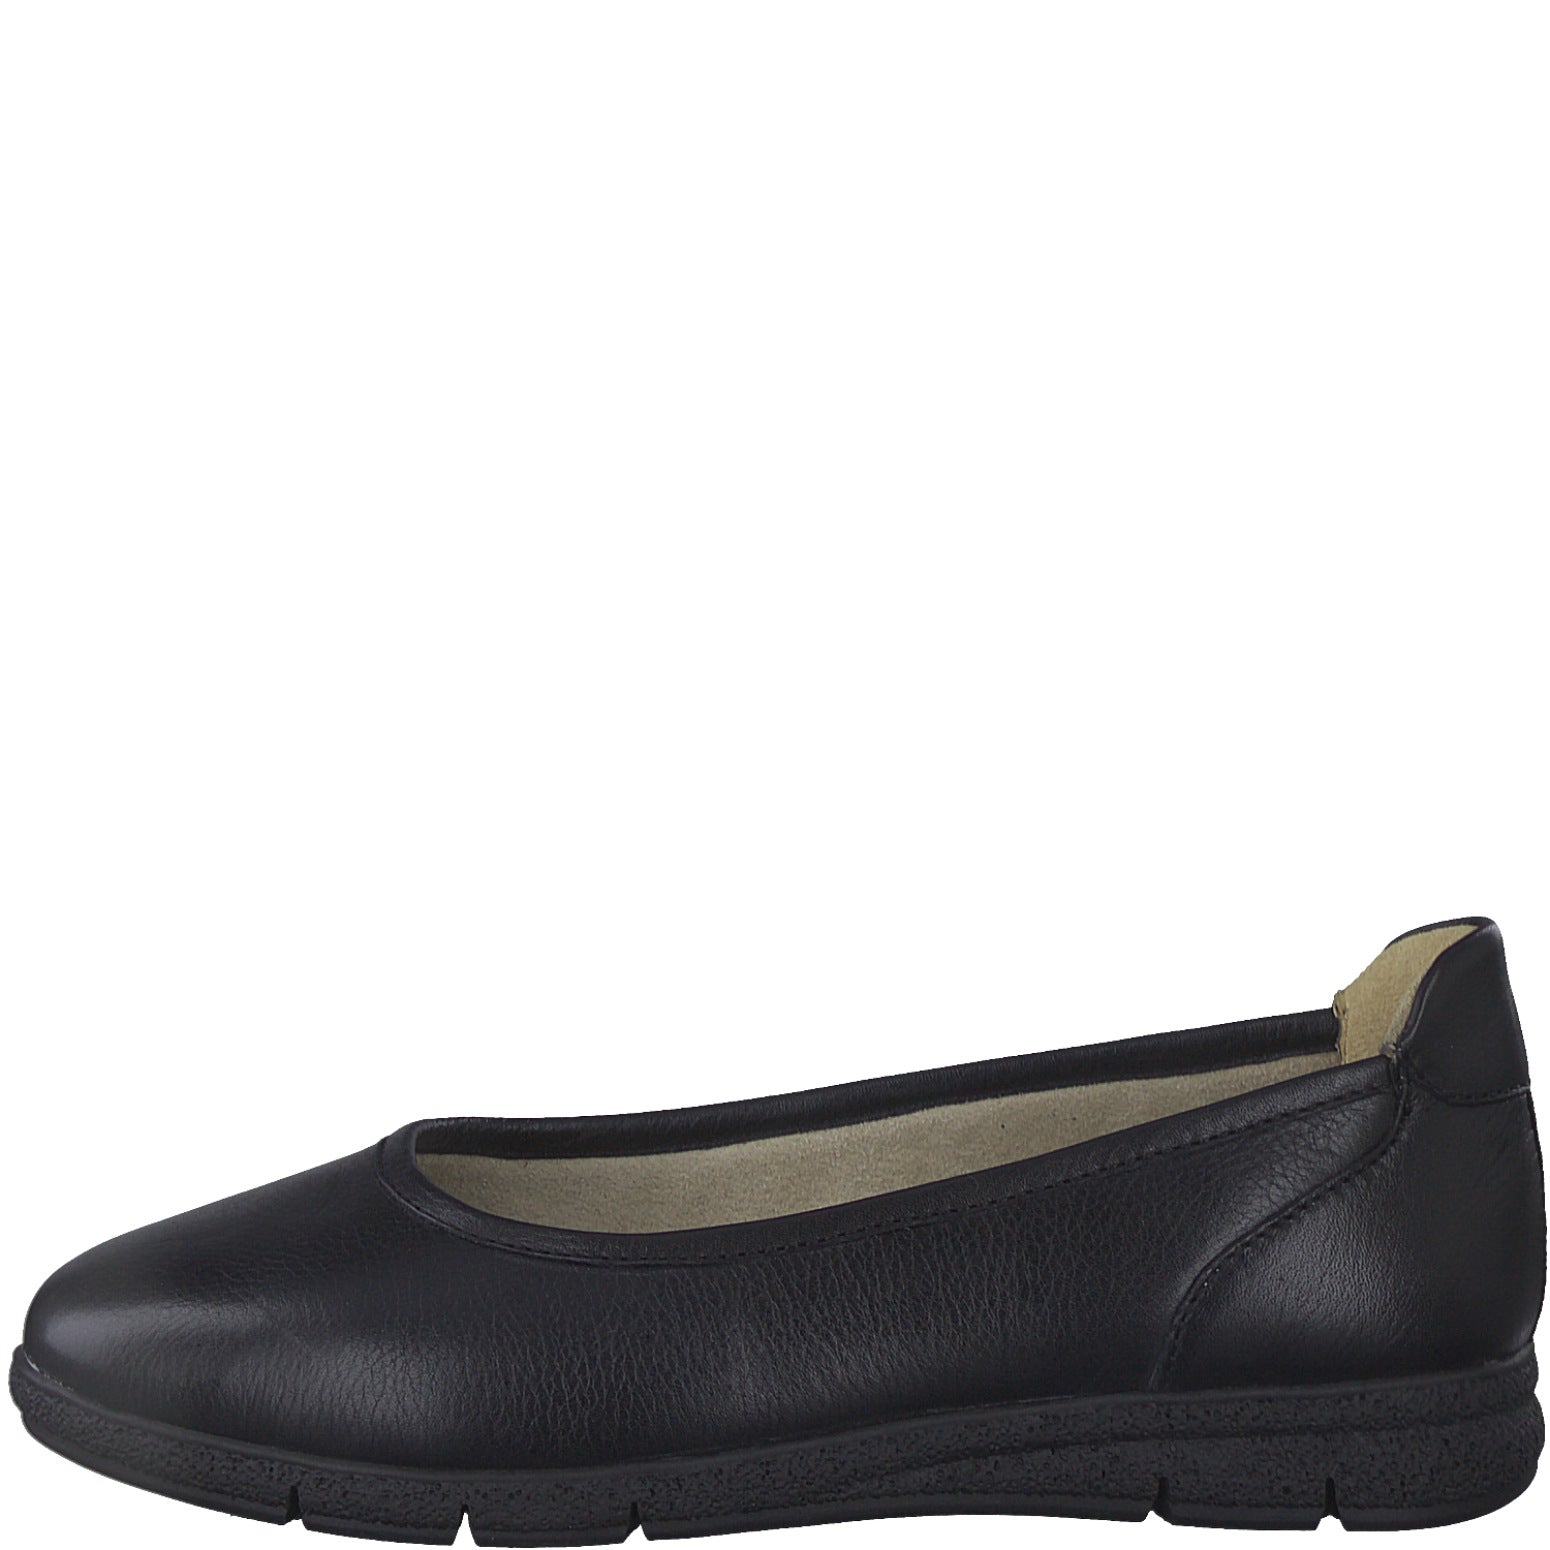 Tamaris 008-52100-20-022 - Grande et jolie - chaussures grandes tailles femme